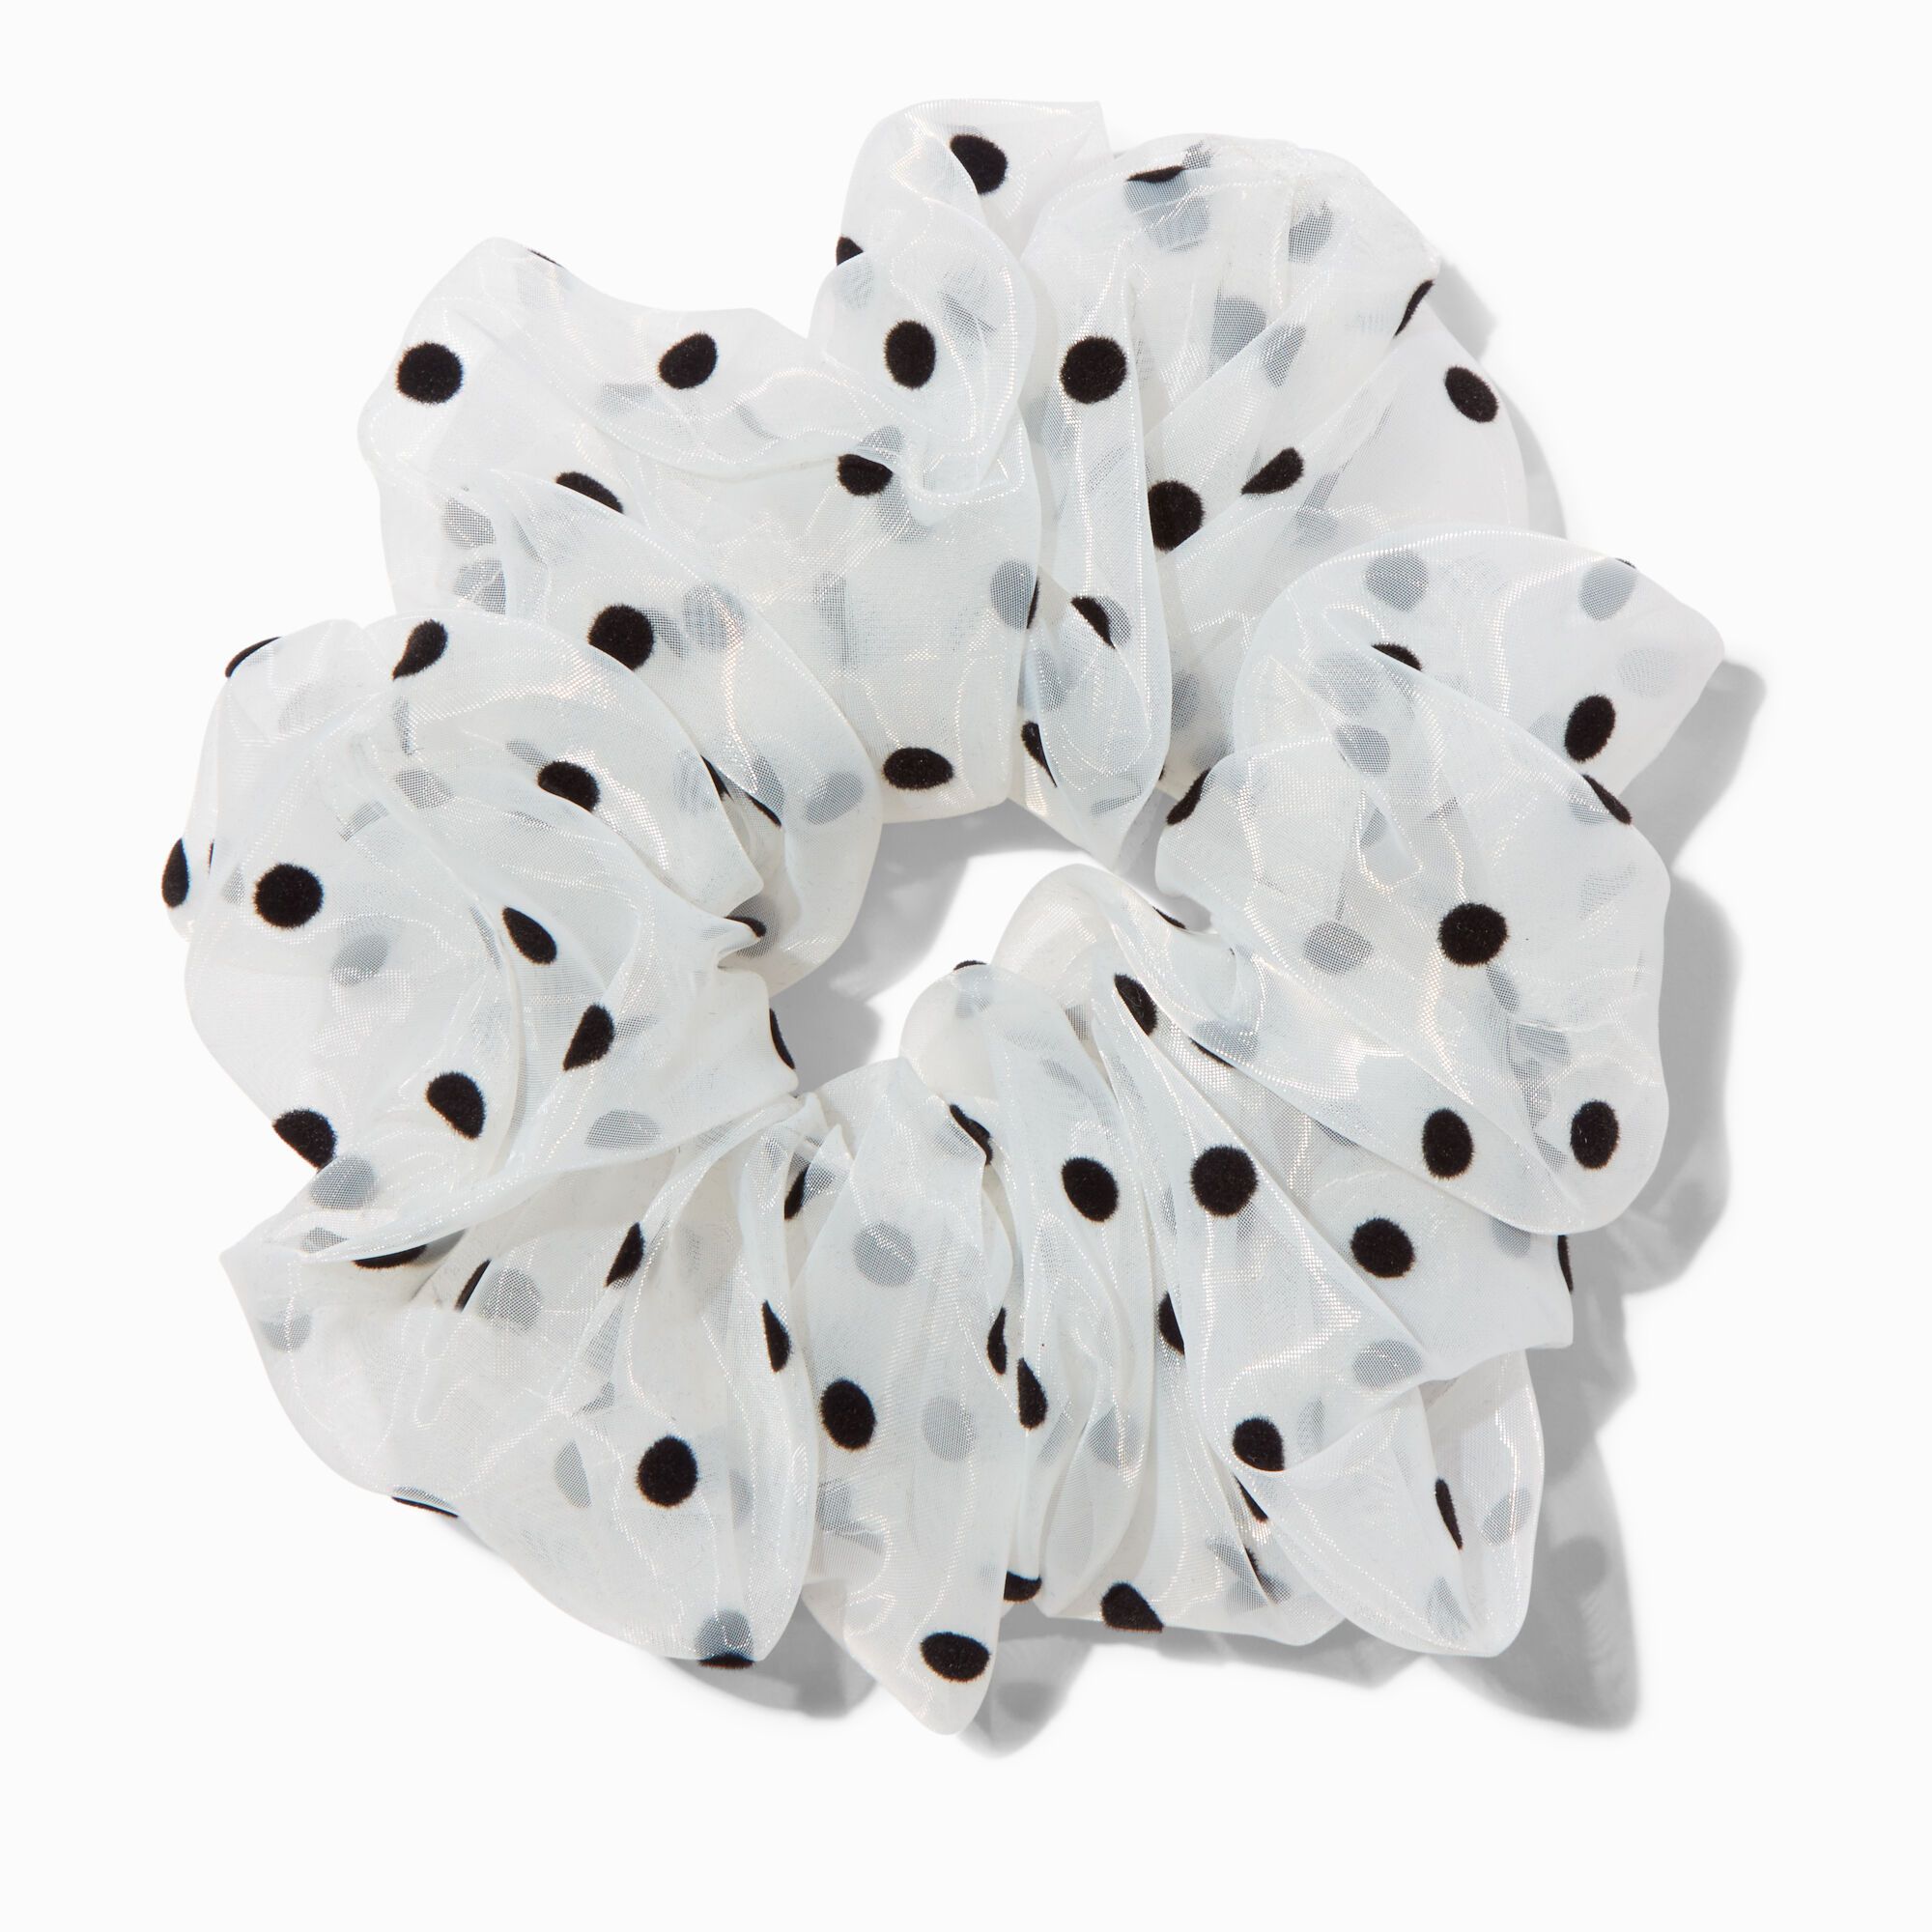 View Claires Giant Polka Dot Hair Scrunchie Bracelet White information